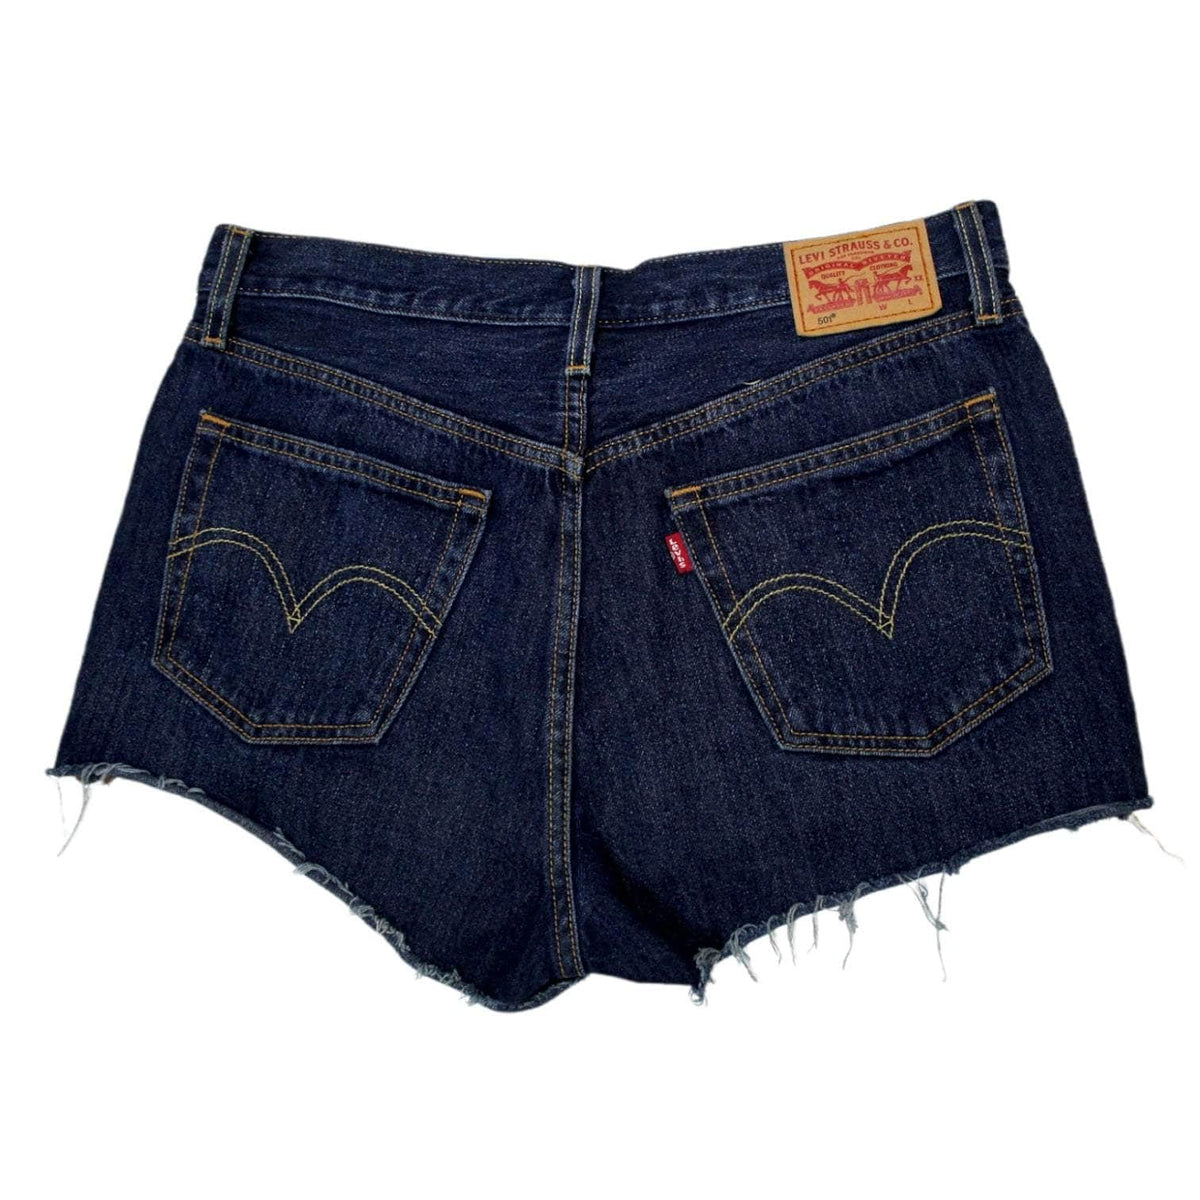 Levi's 501 Blue Denim Cut-Off Shorts